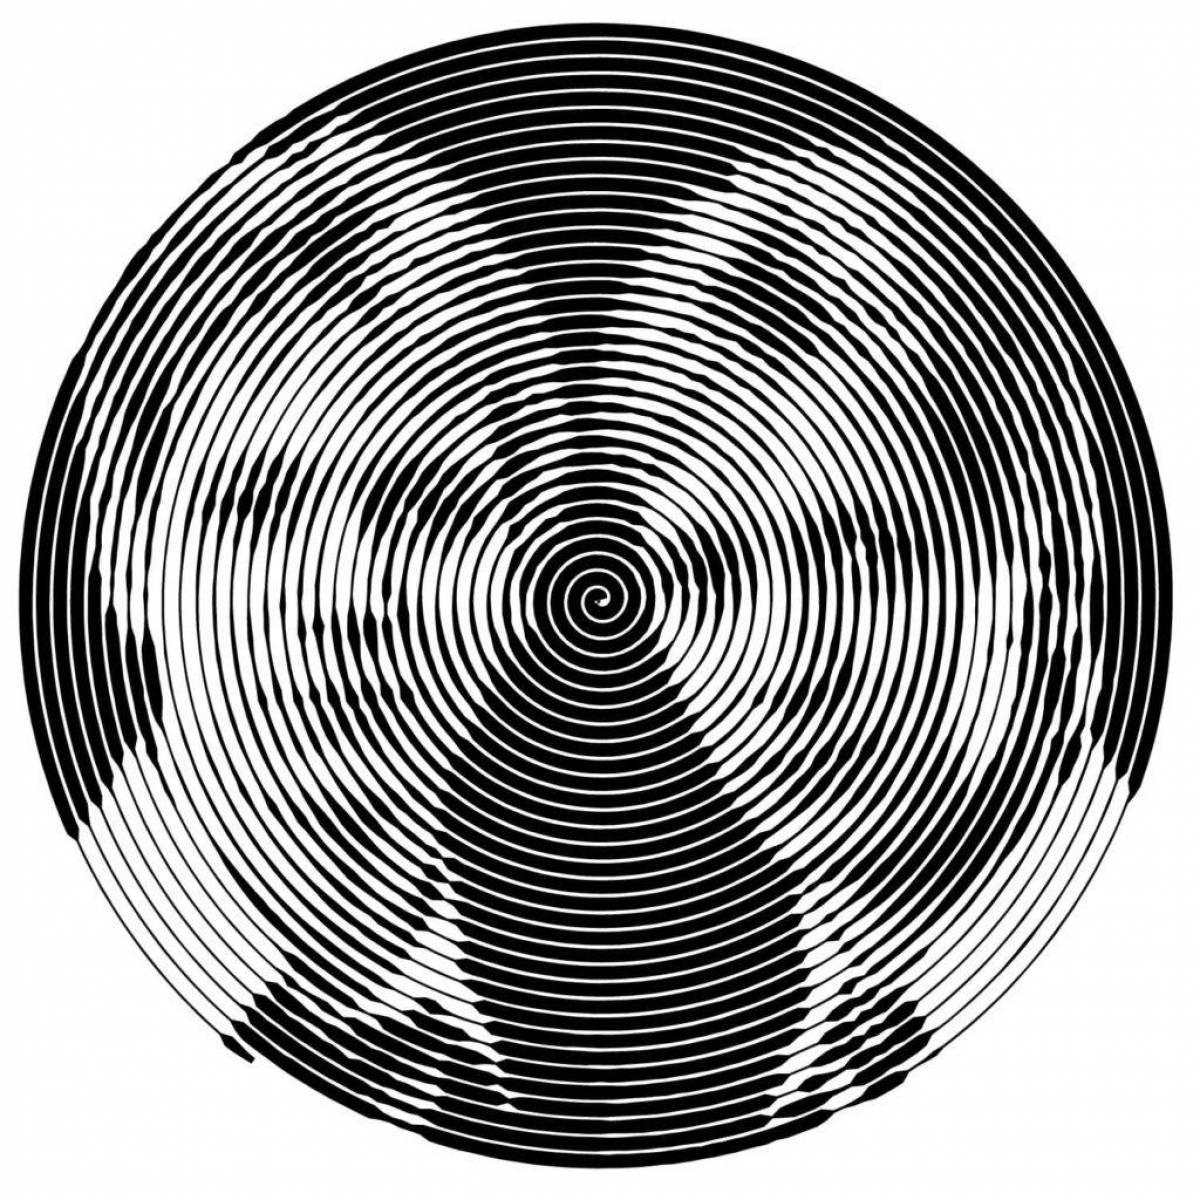 Coloring complex circular spiral